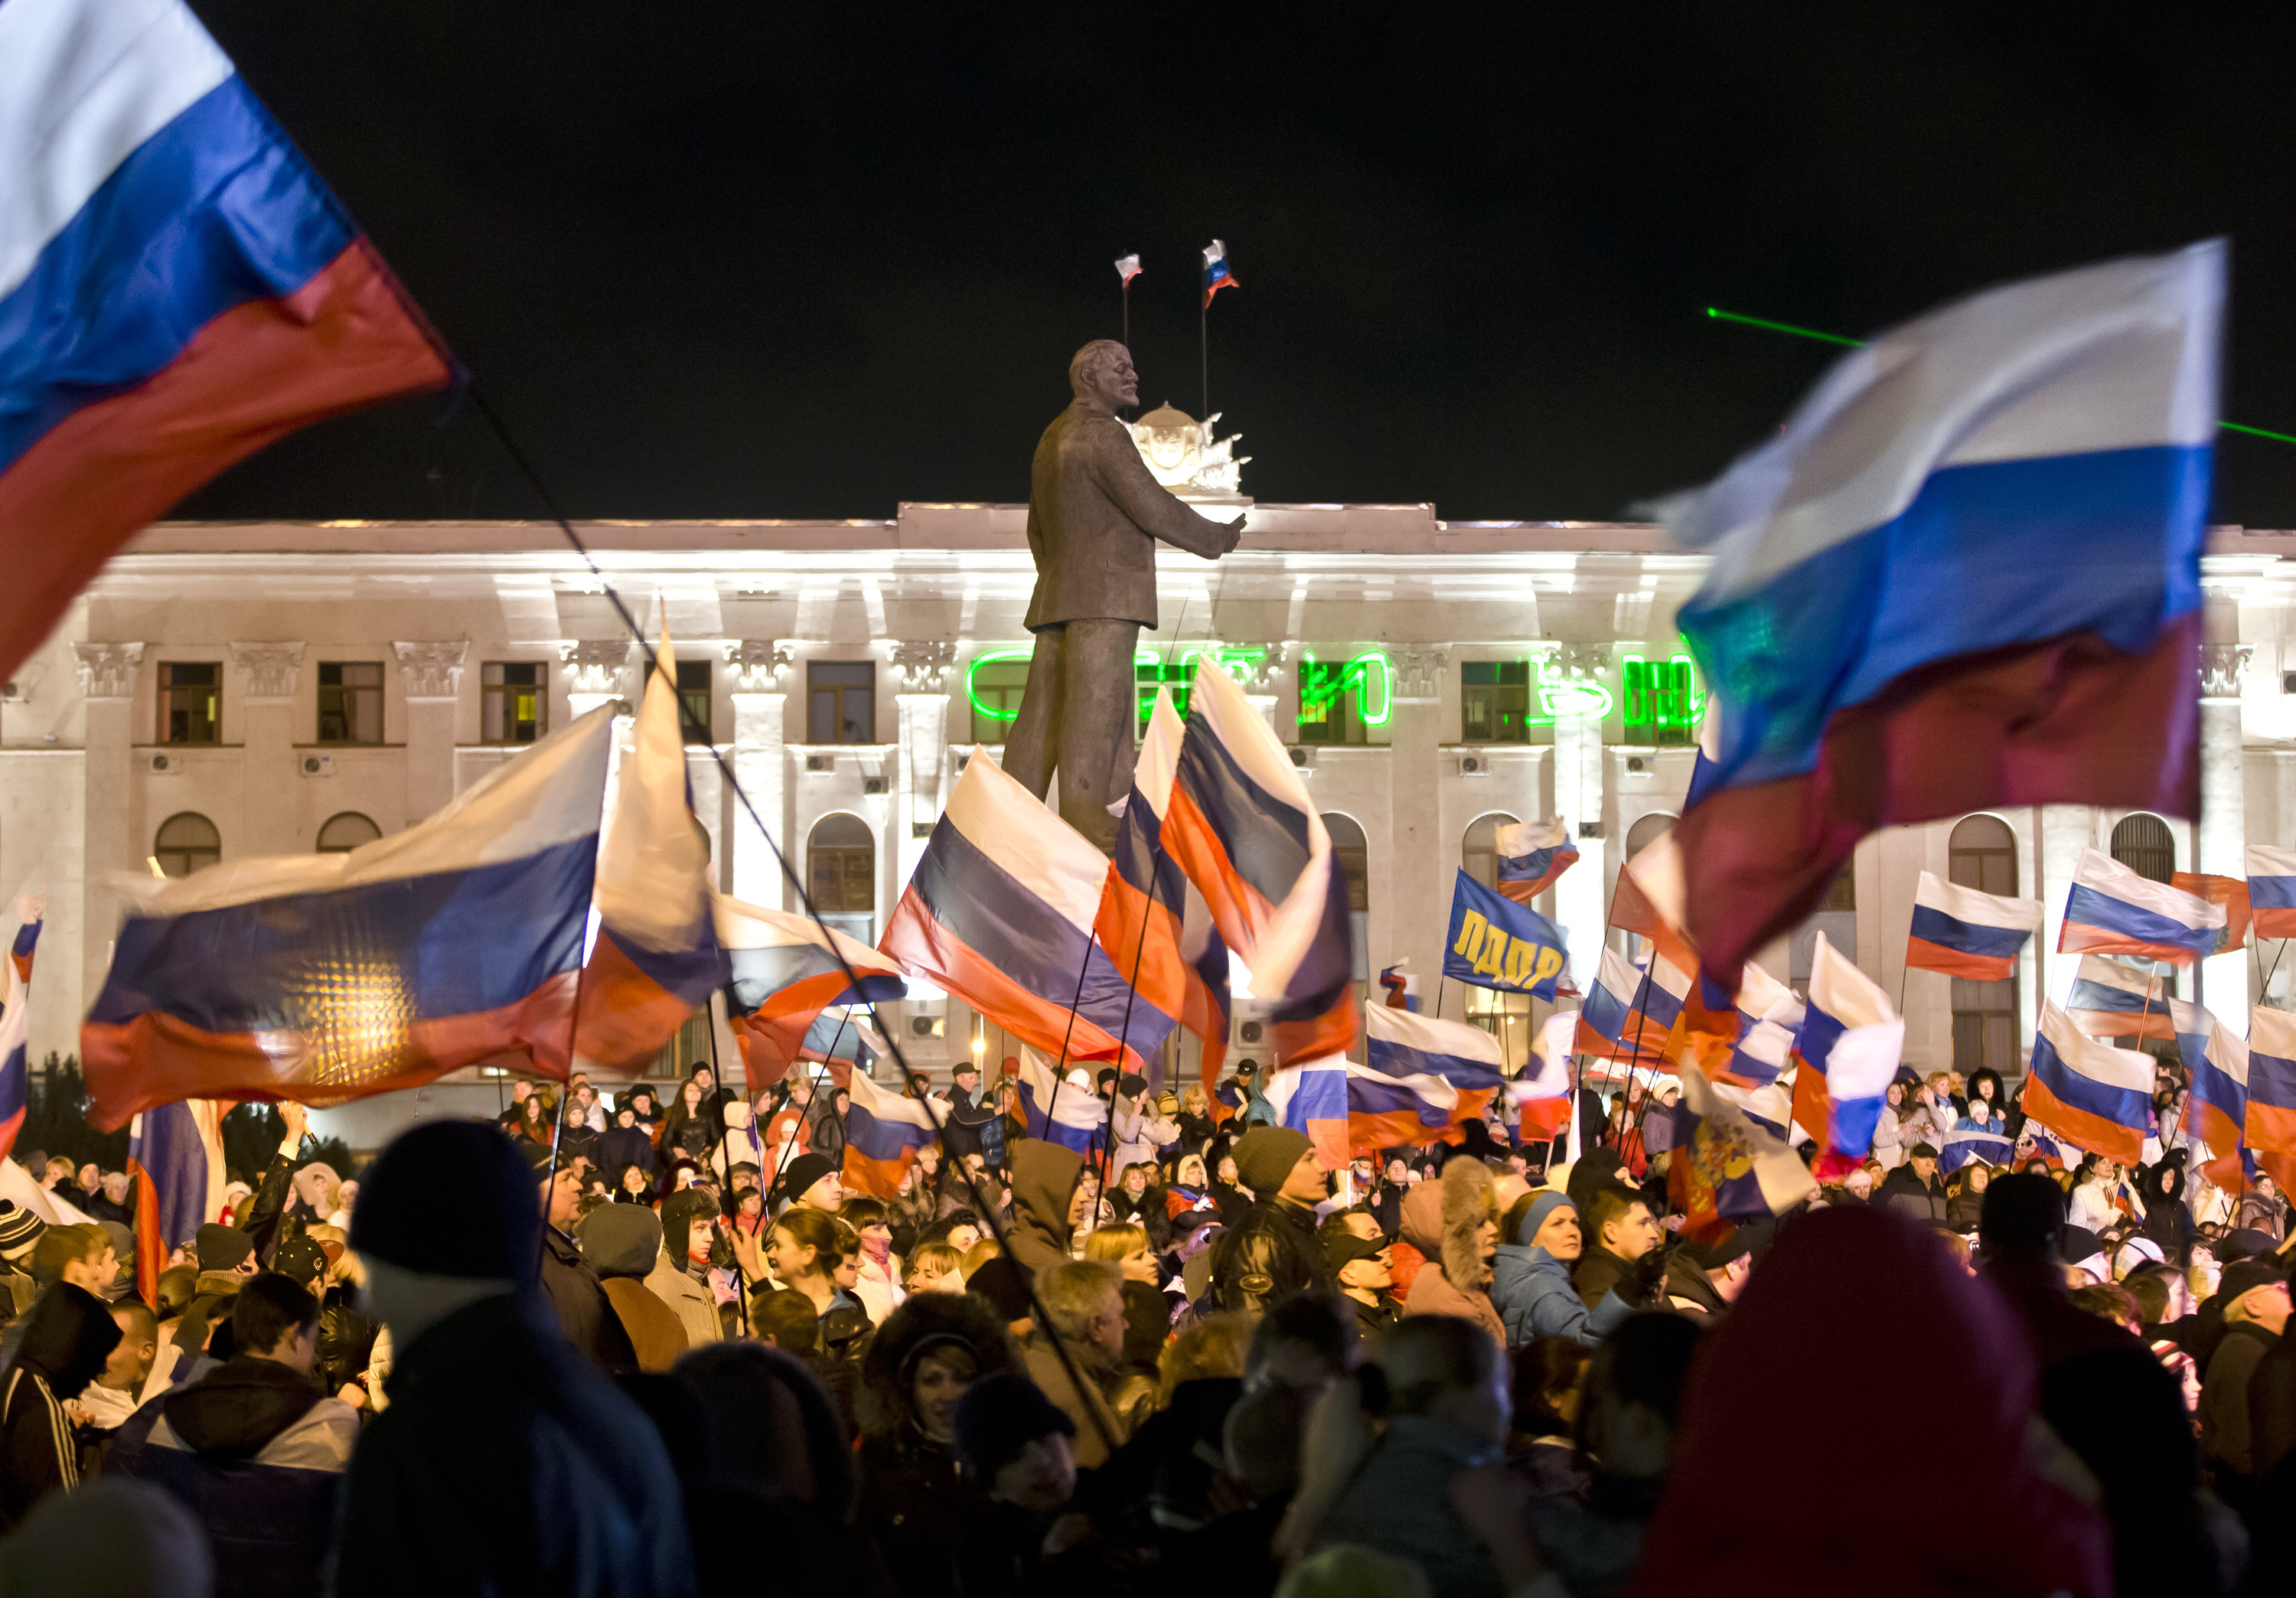 Russians celebrate in Lenin Square in Simferopol, Ukraine, in 2014 